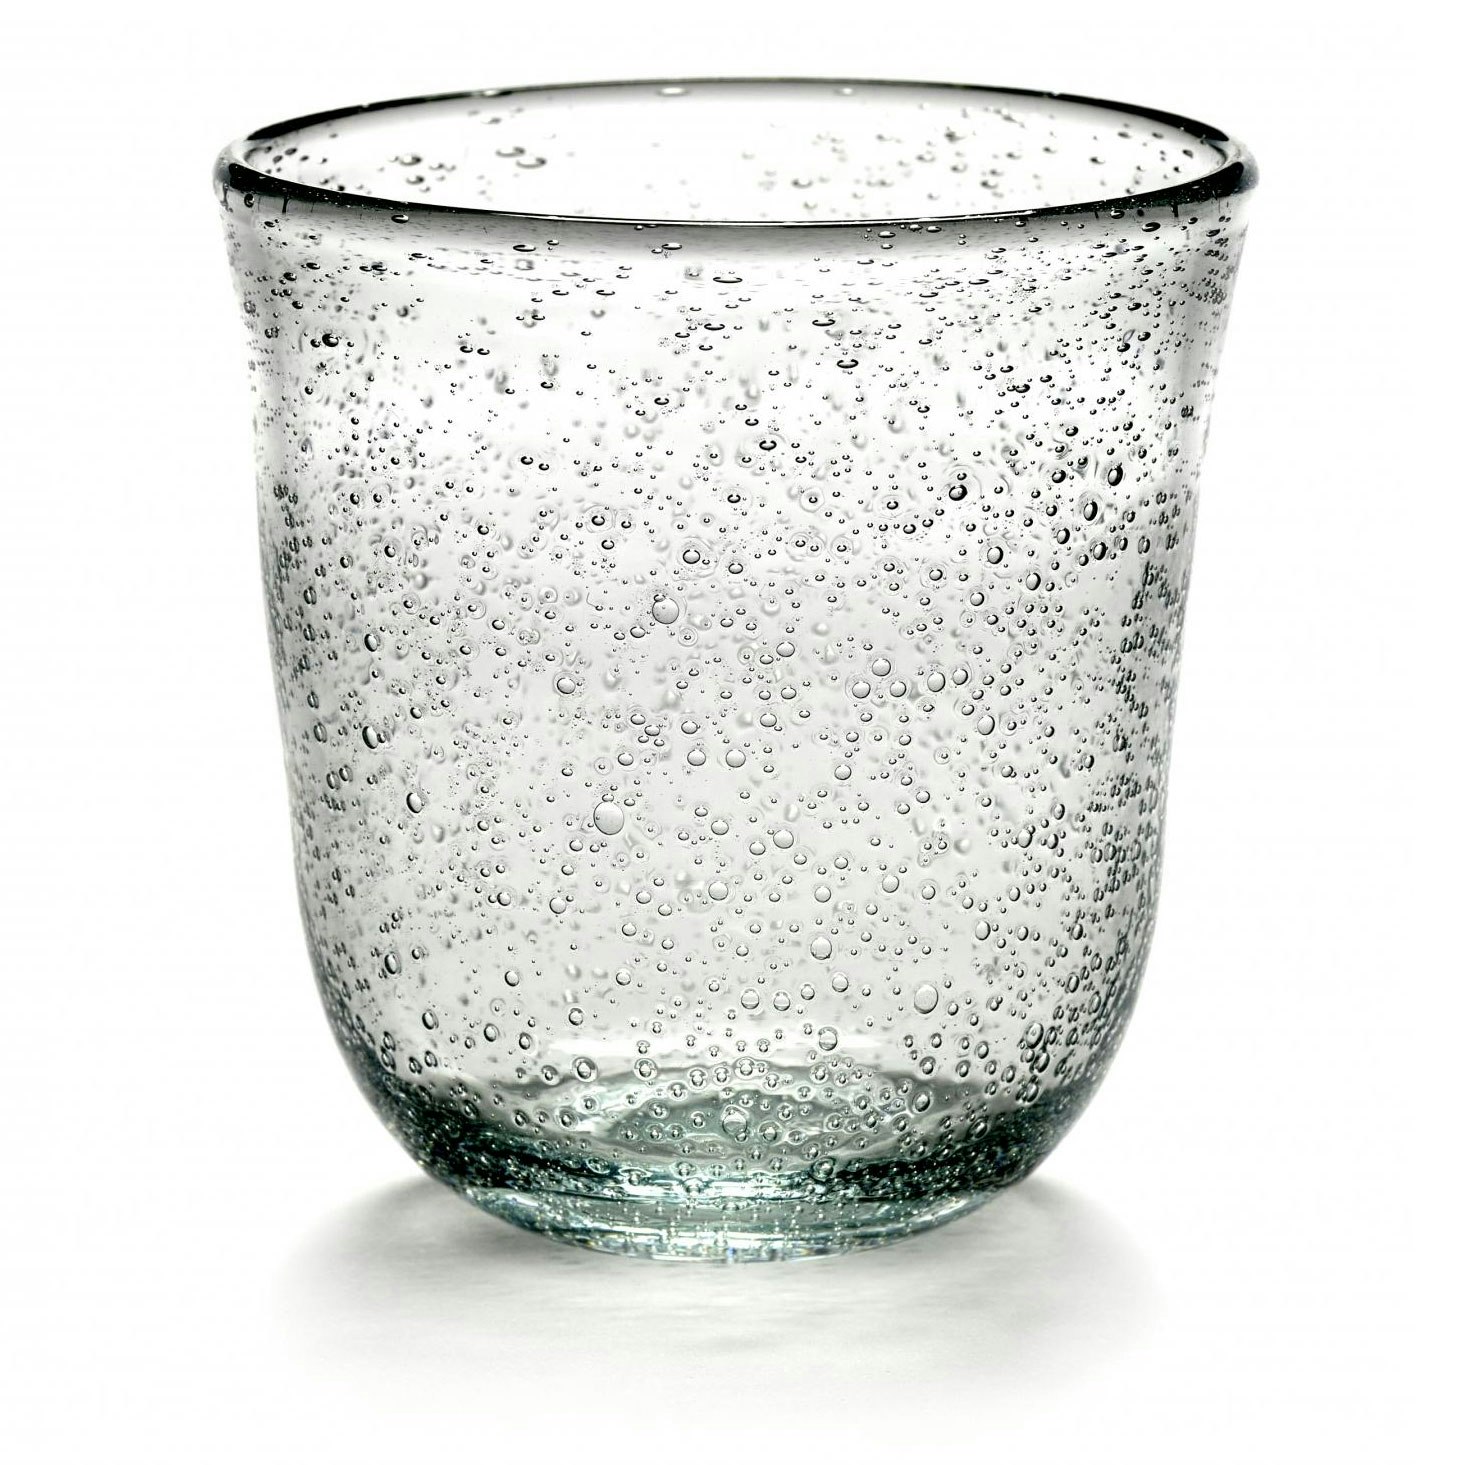 https://royaldesign.com/image/2/serax-pure-pascale-water-glass-0